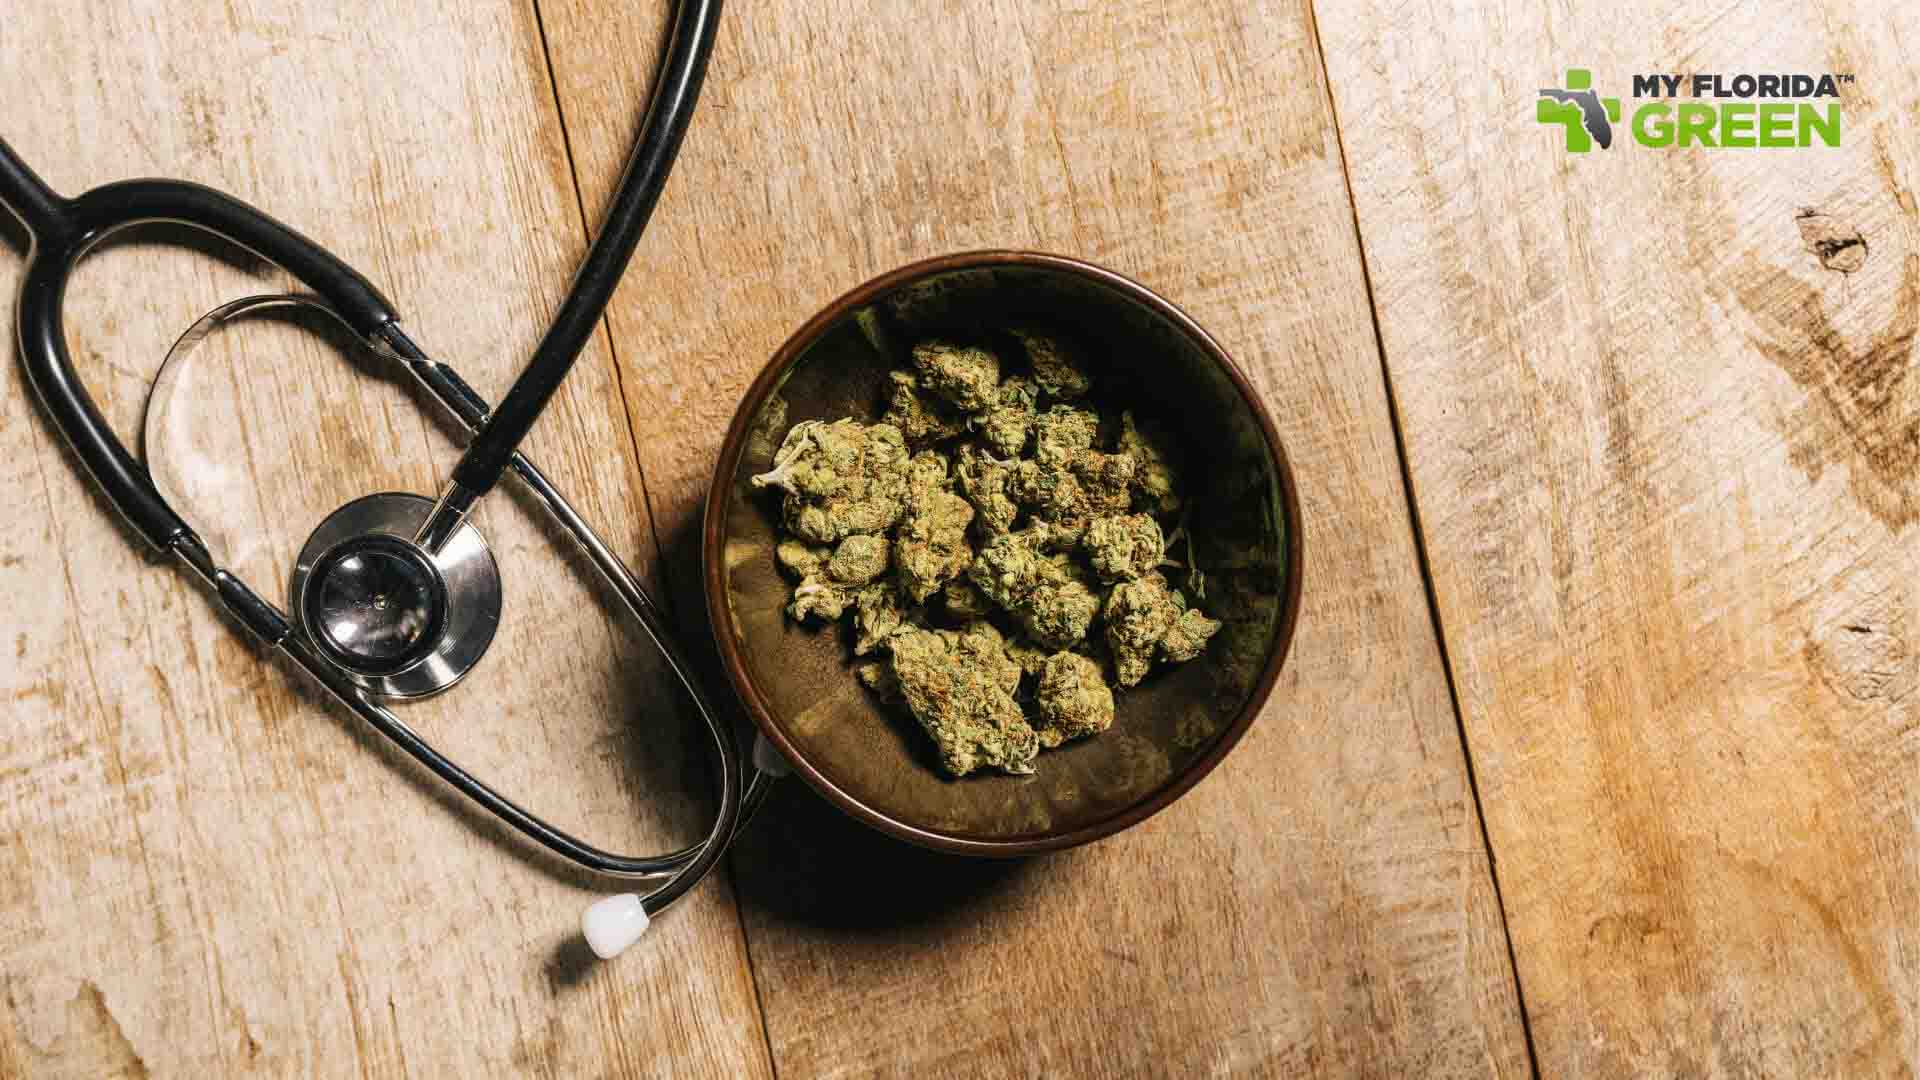 Benefits of Medical Marijuana use in Florida